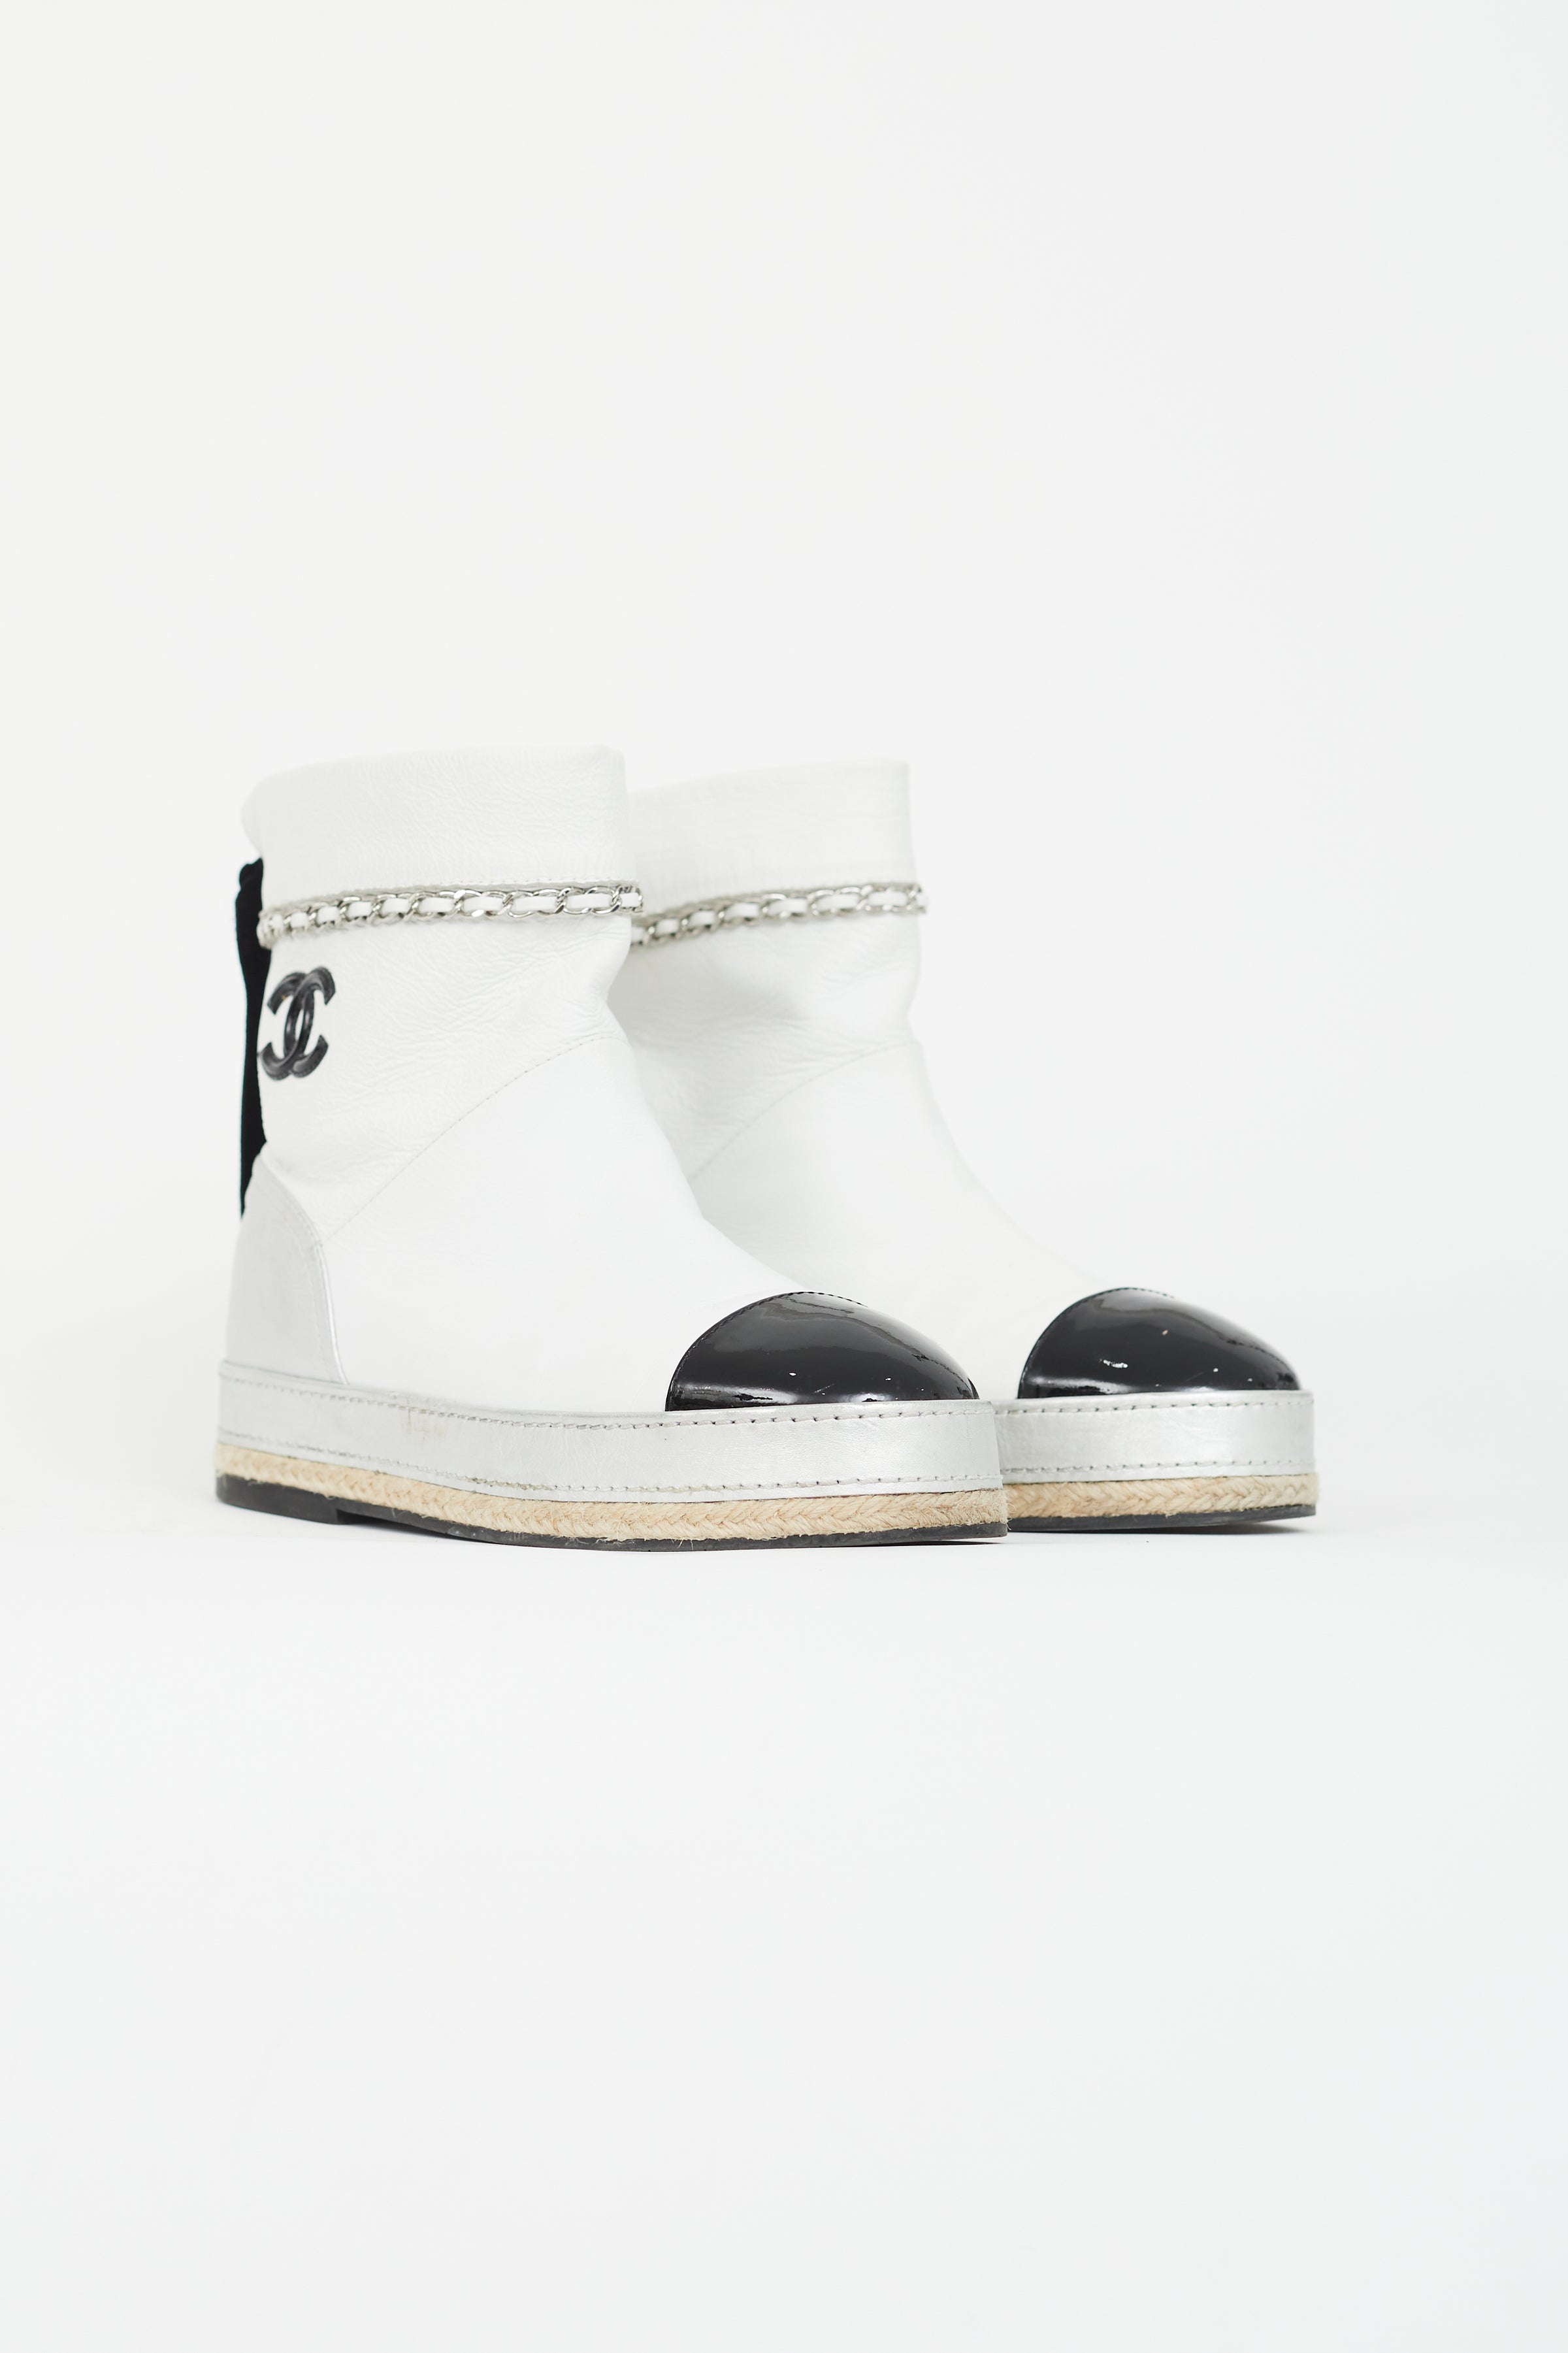 CHANEL, Shoes, Chanel Whiteblack Lambskin Espadrilles Size 37